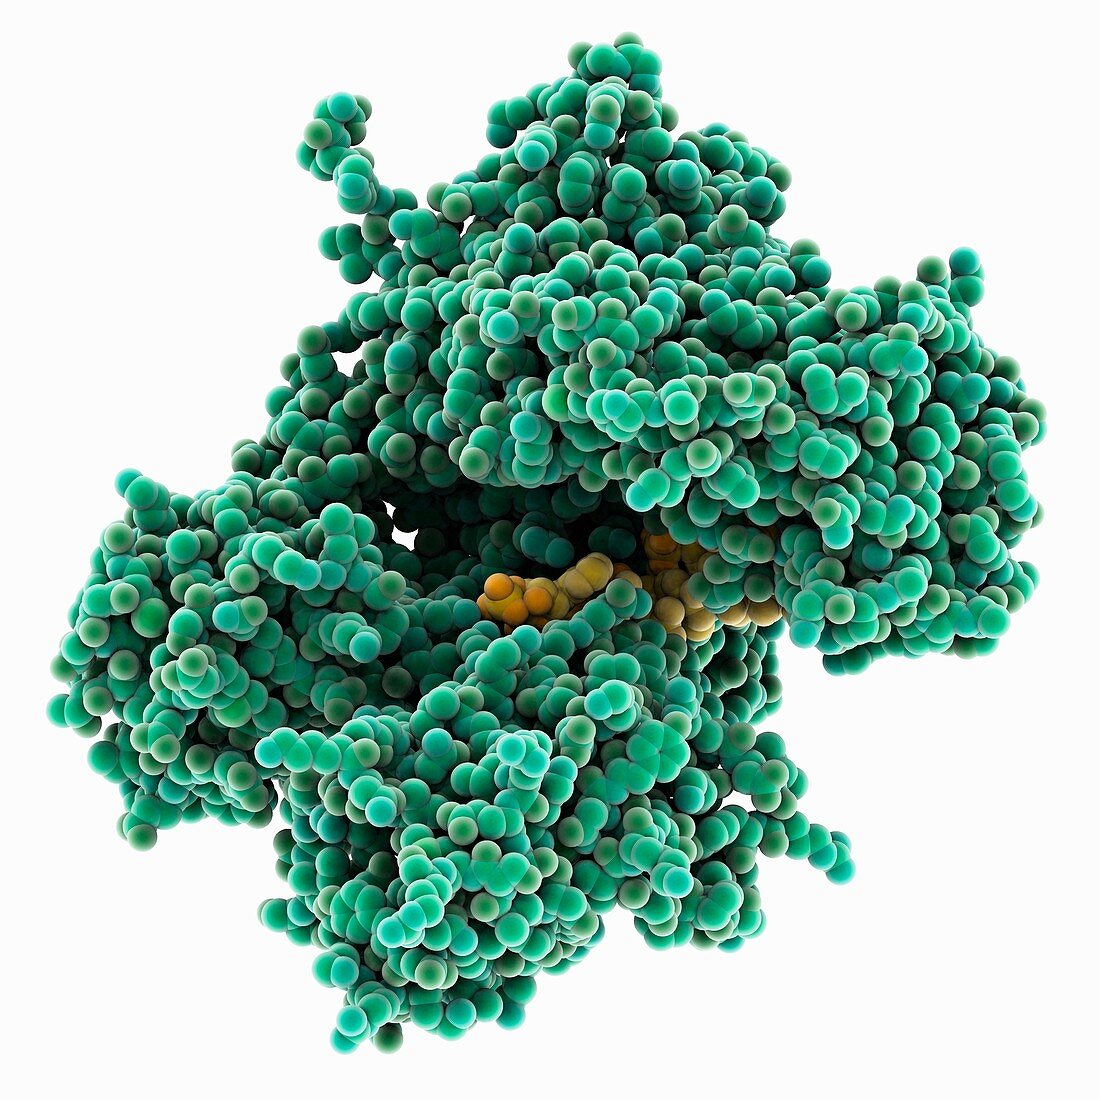 Argonaute protein and RNA